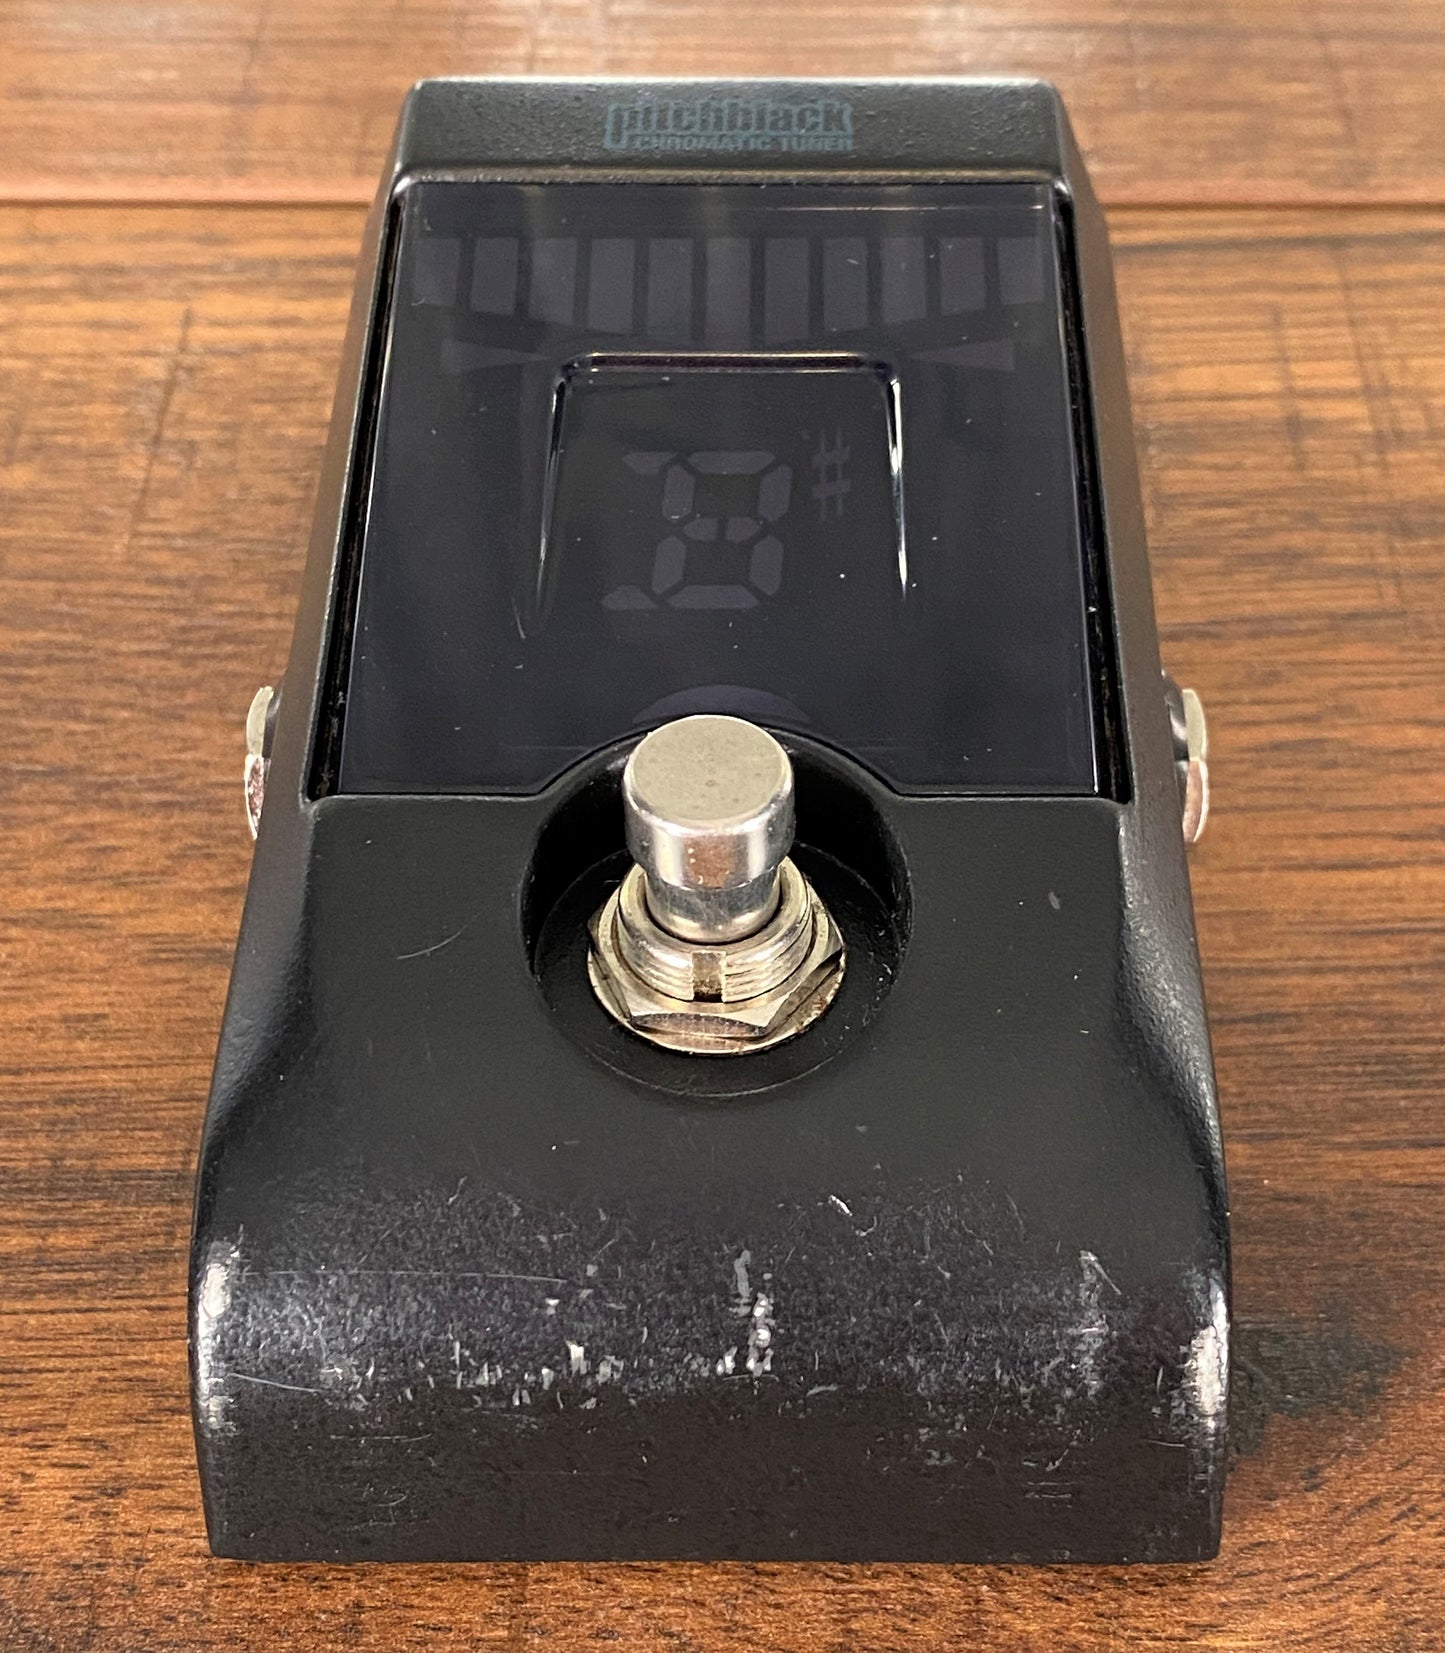 Korg PB-01 Pitchblack Guitar & Bass Chromatic Tuner Effect Pedal Used